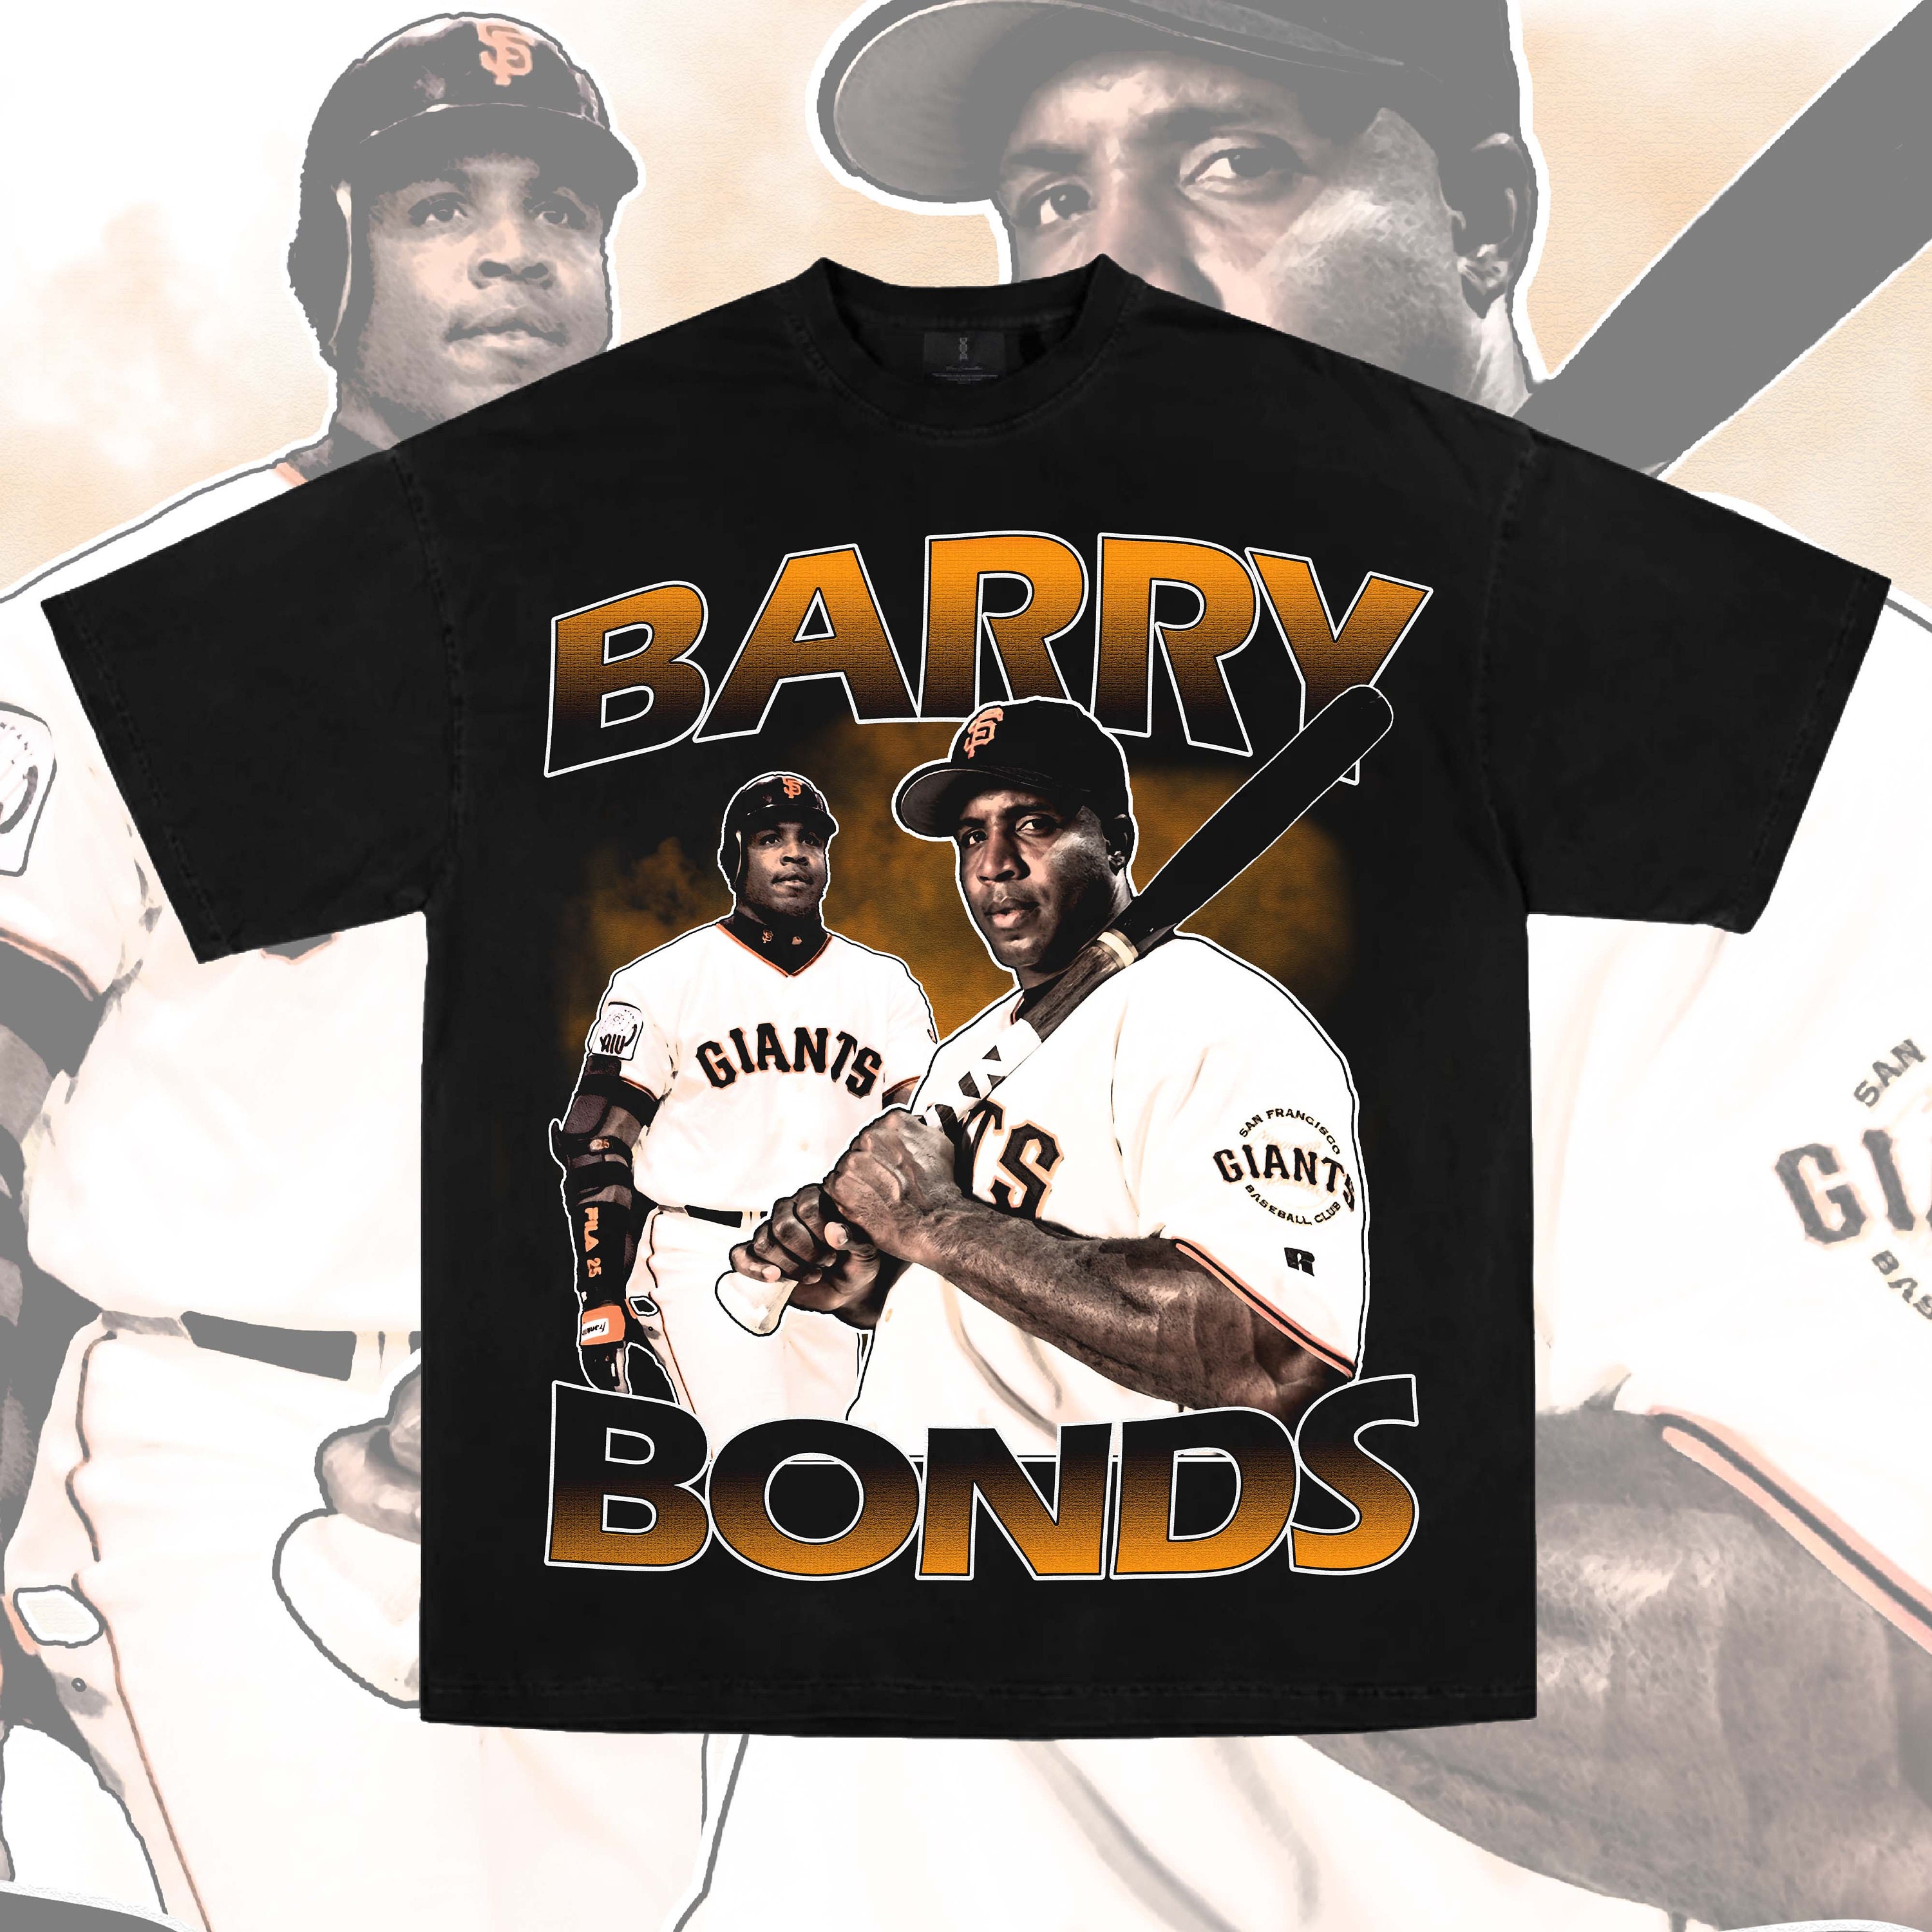 barry bonds T Shirt Design PNG Instant Download